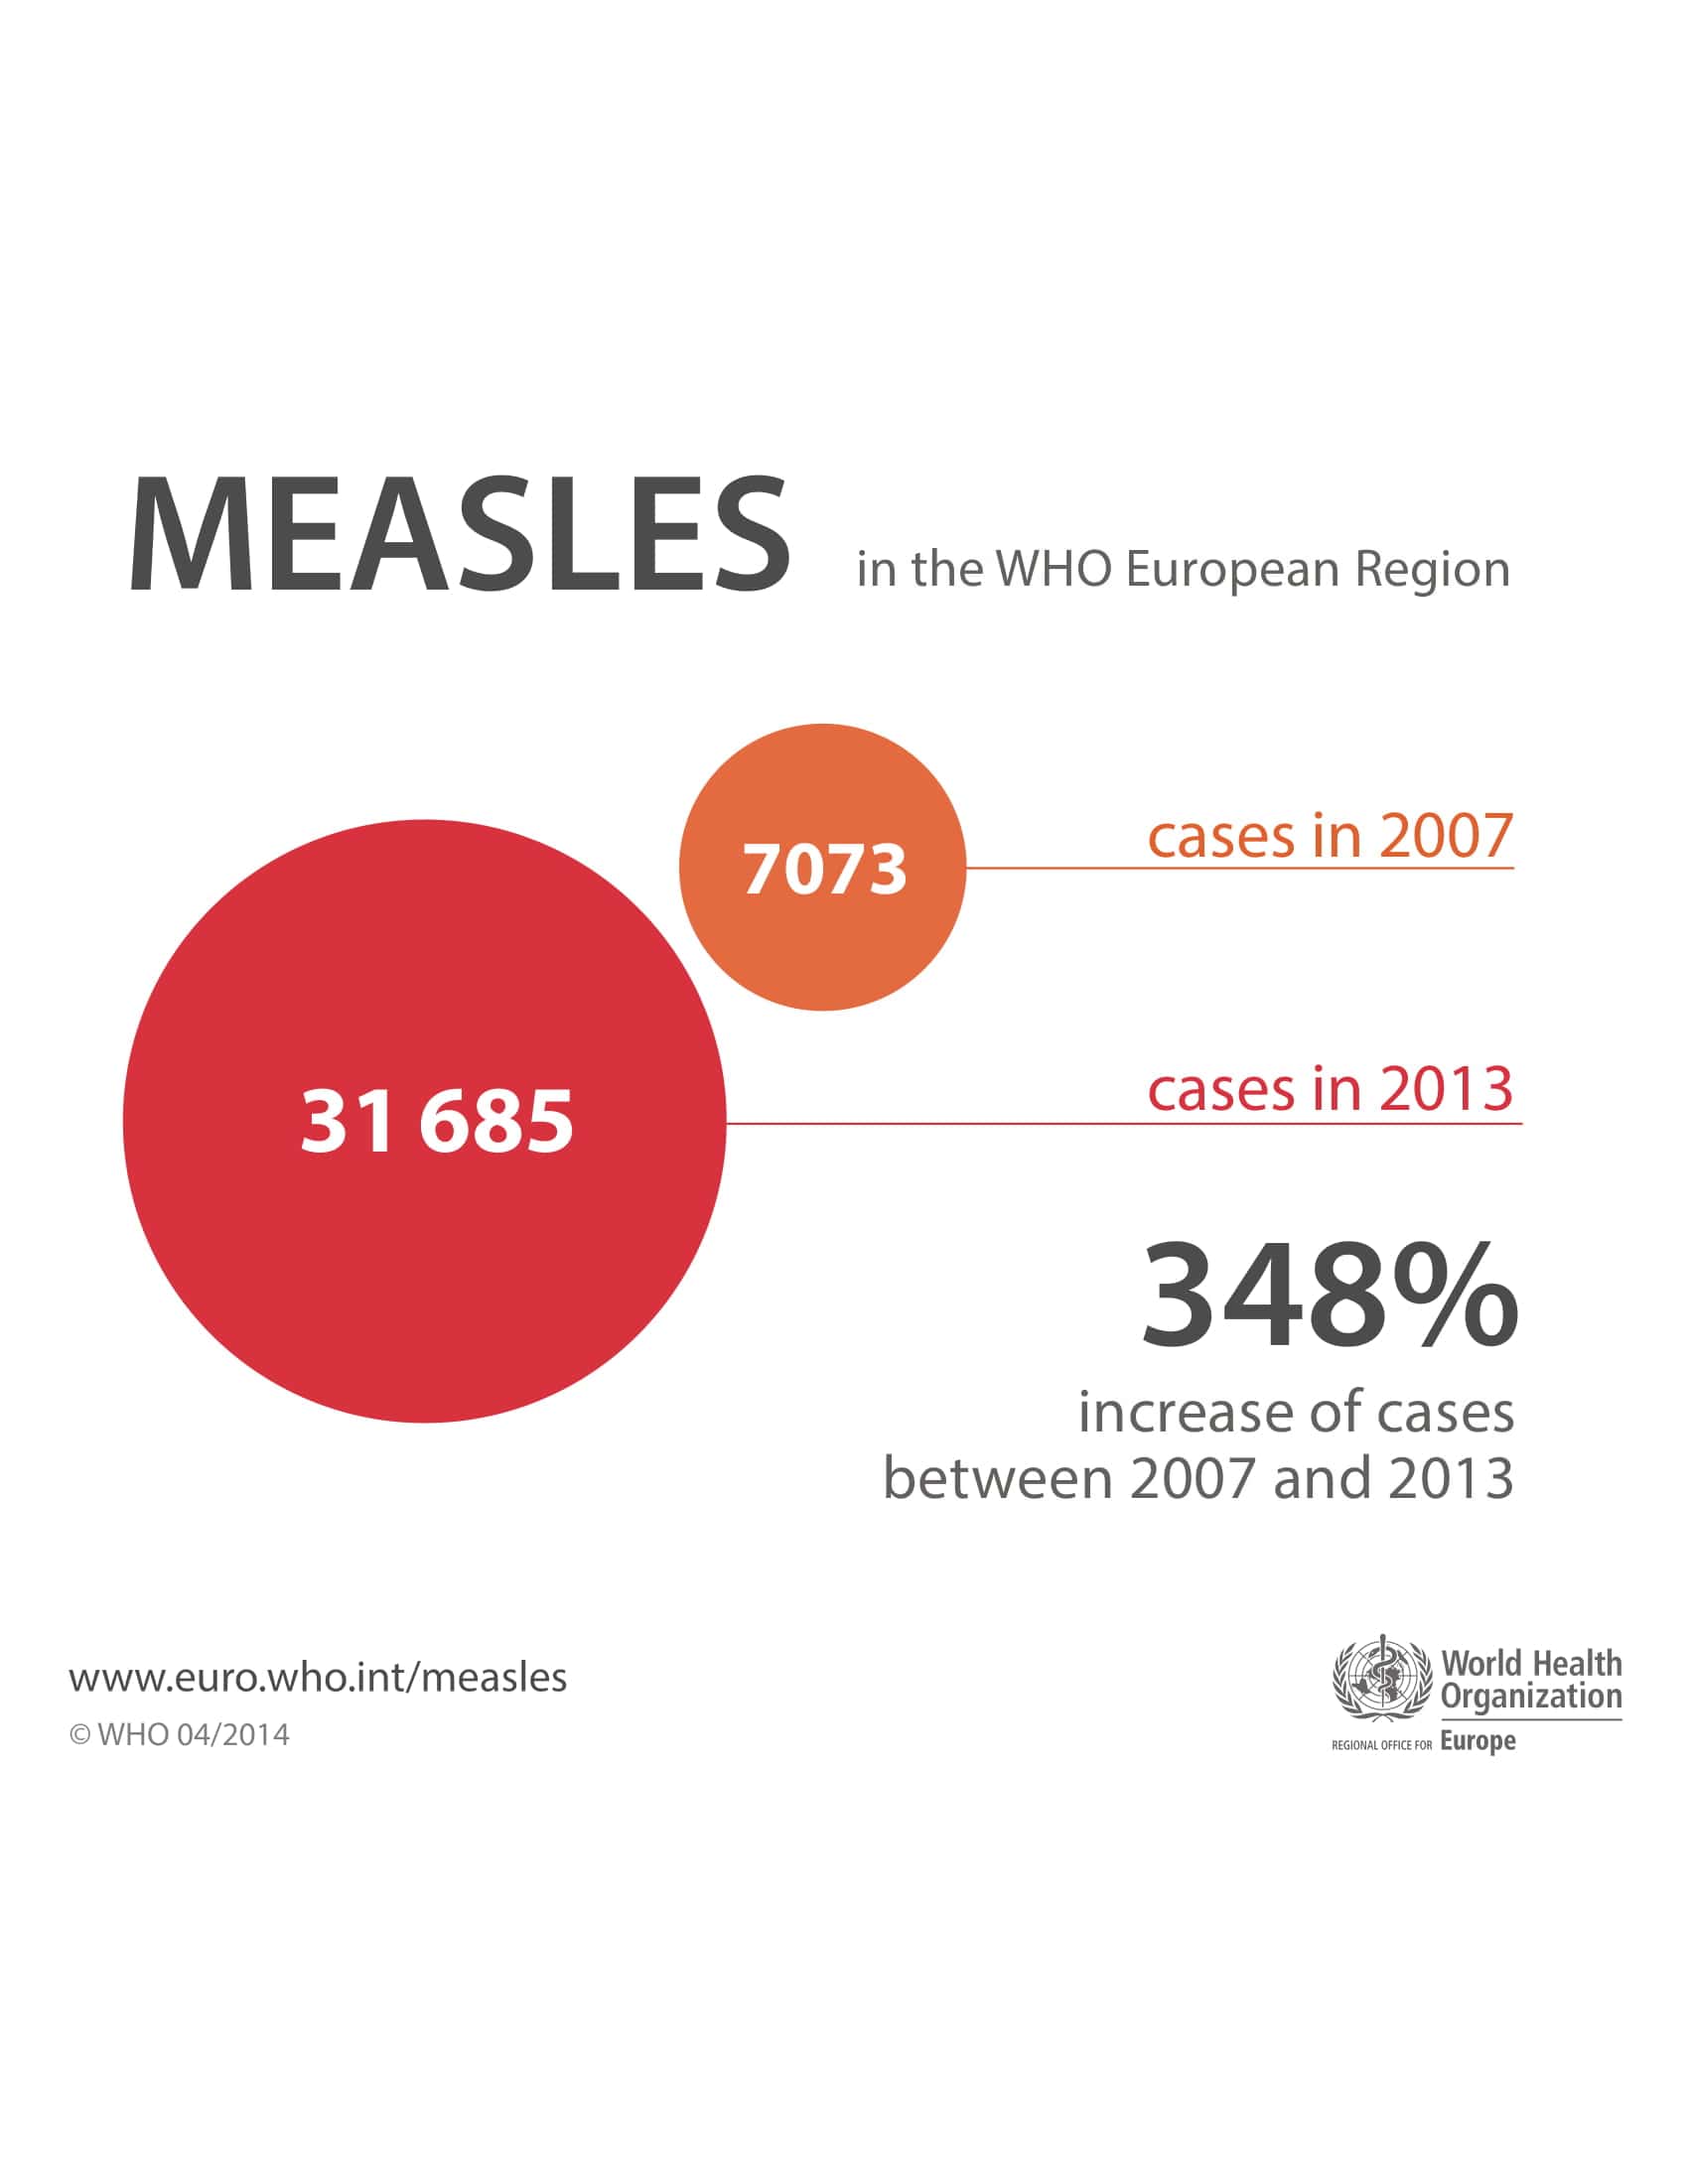 Measles in the WHO European Region